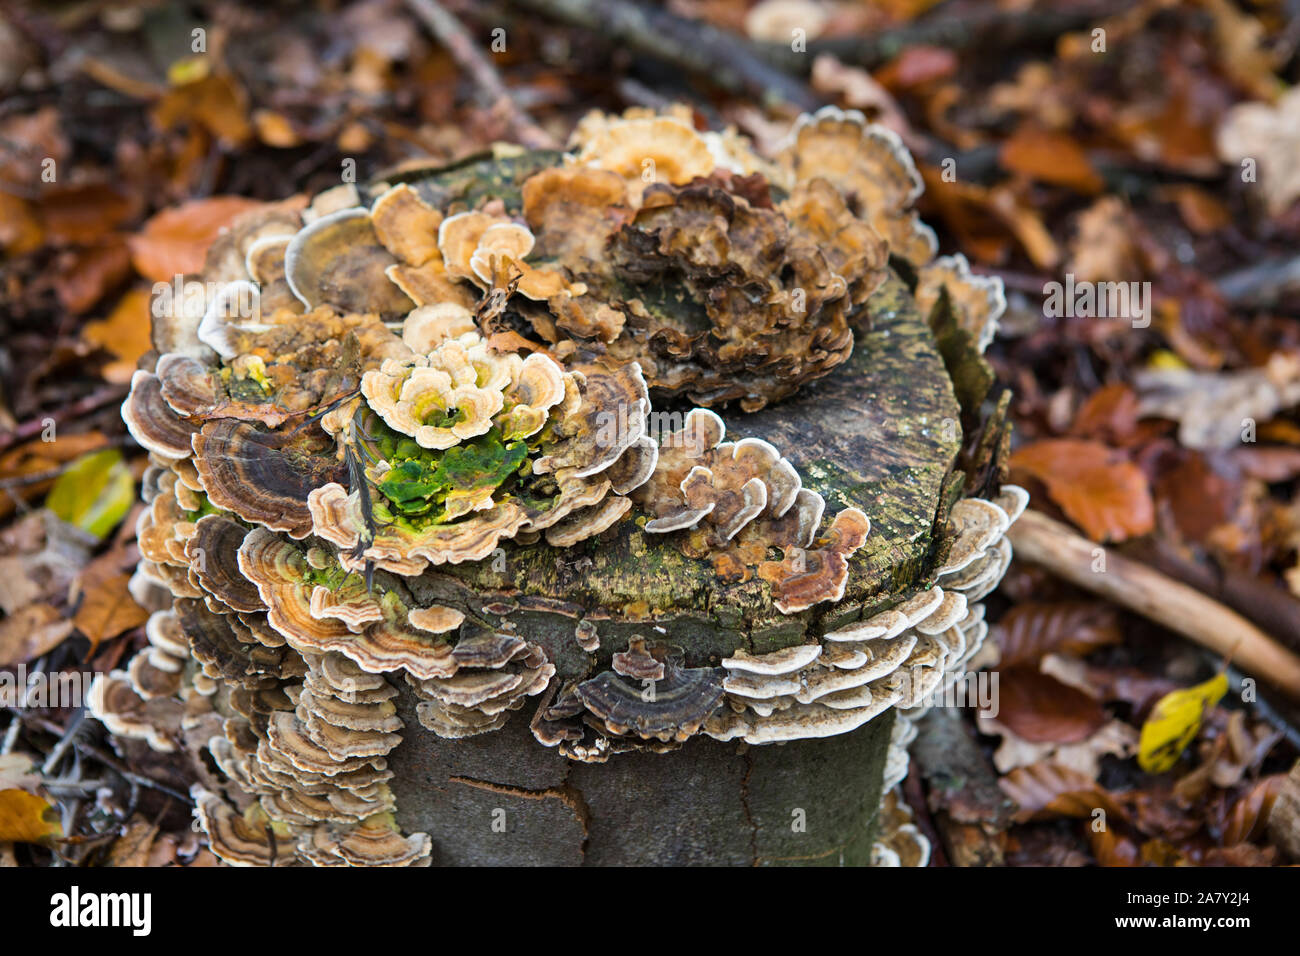 Turkey tail (Trametes Versicolor) mushrooms growing on the stump of a beech tree in autumn Stock Photo